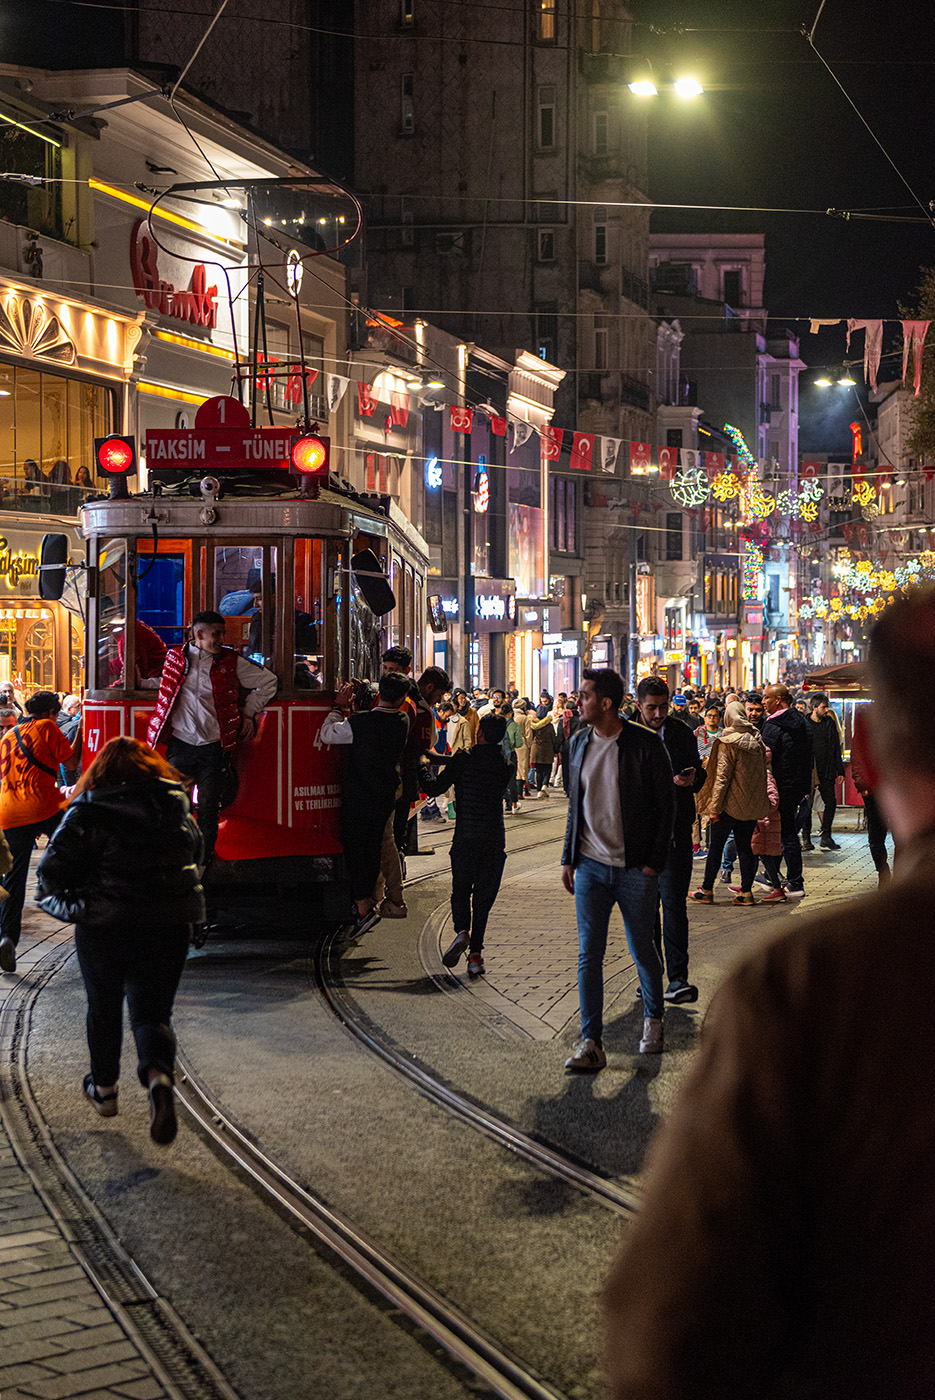 The Taksim tram at night